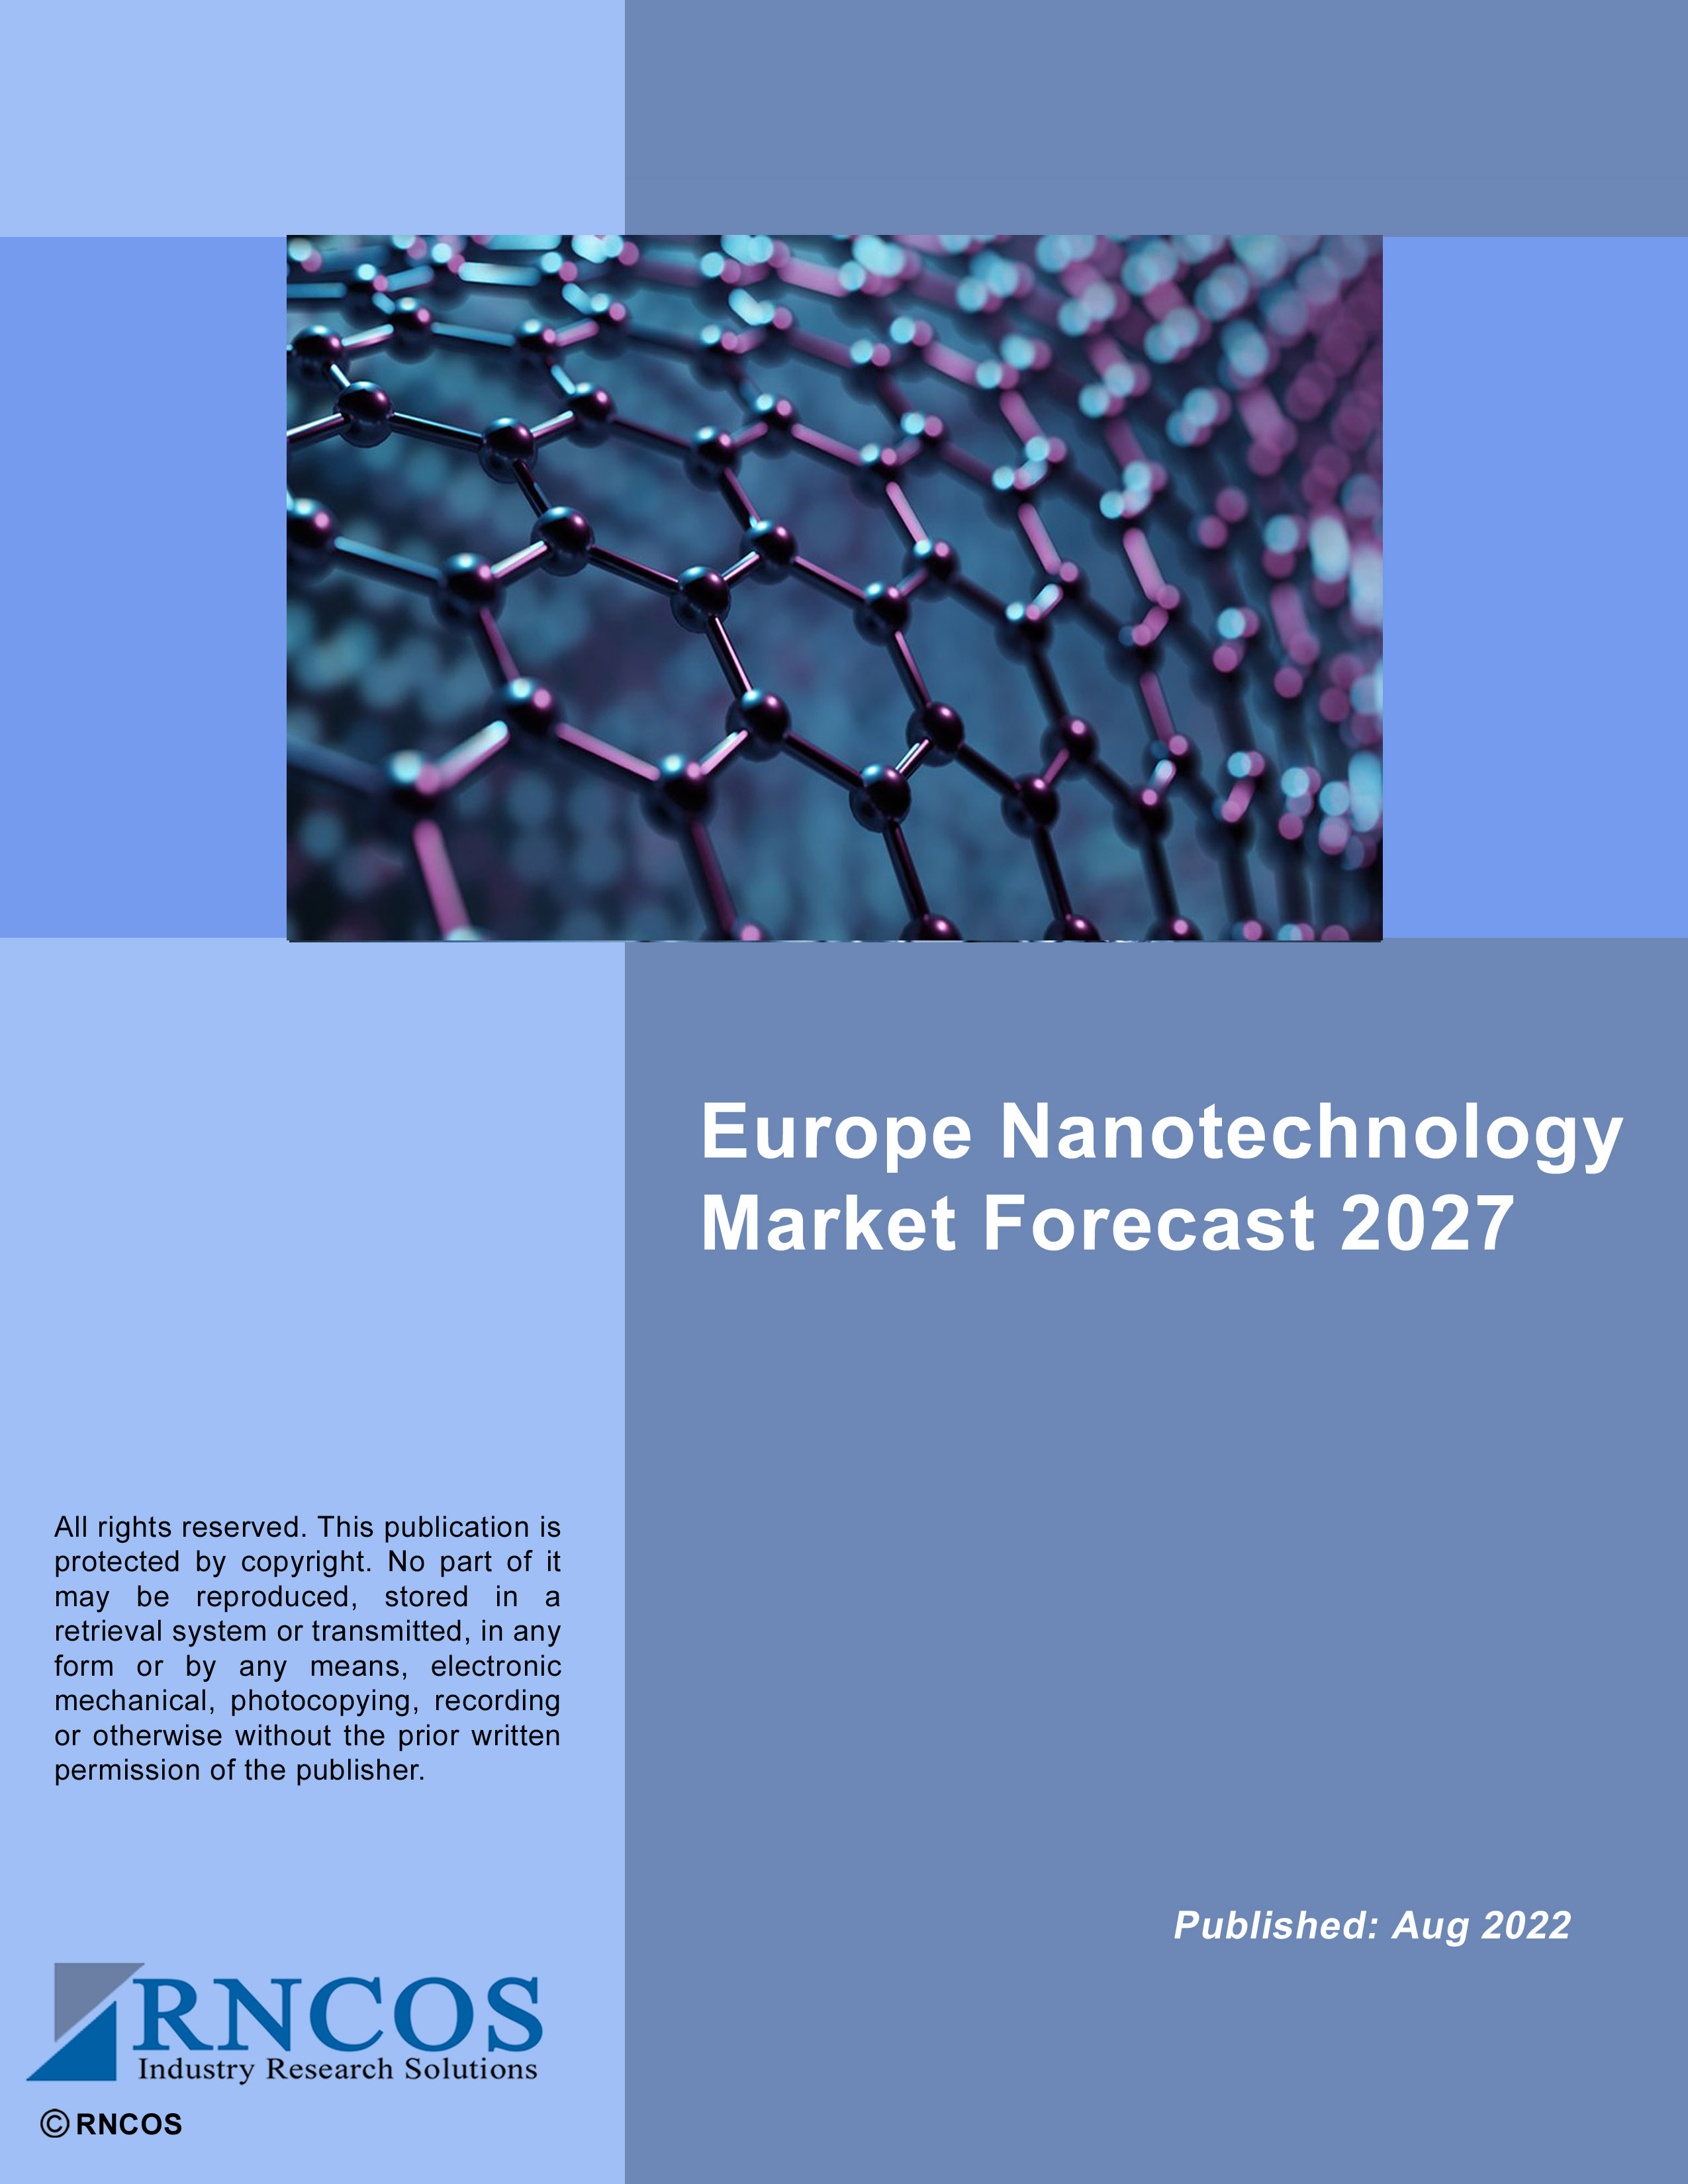 Europe Nanotechnology Market Forecast 2027 Research Report